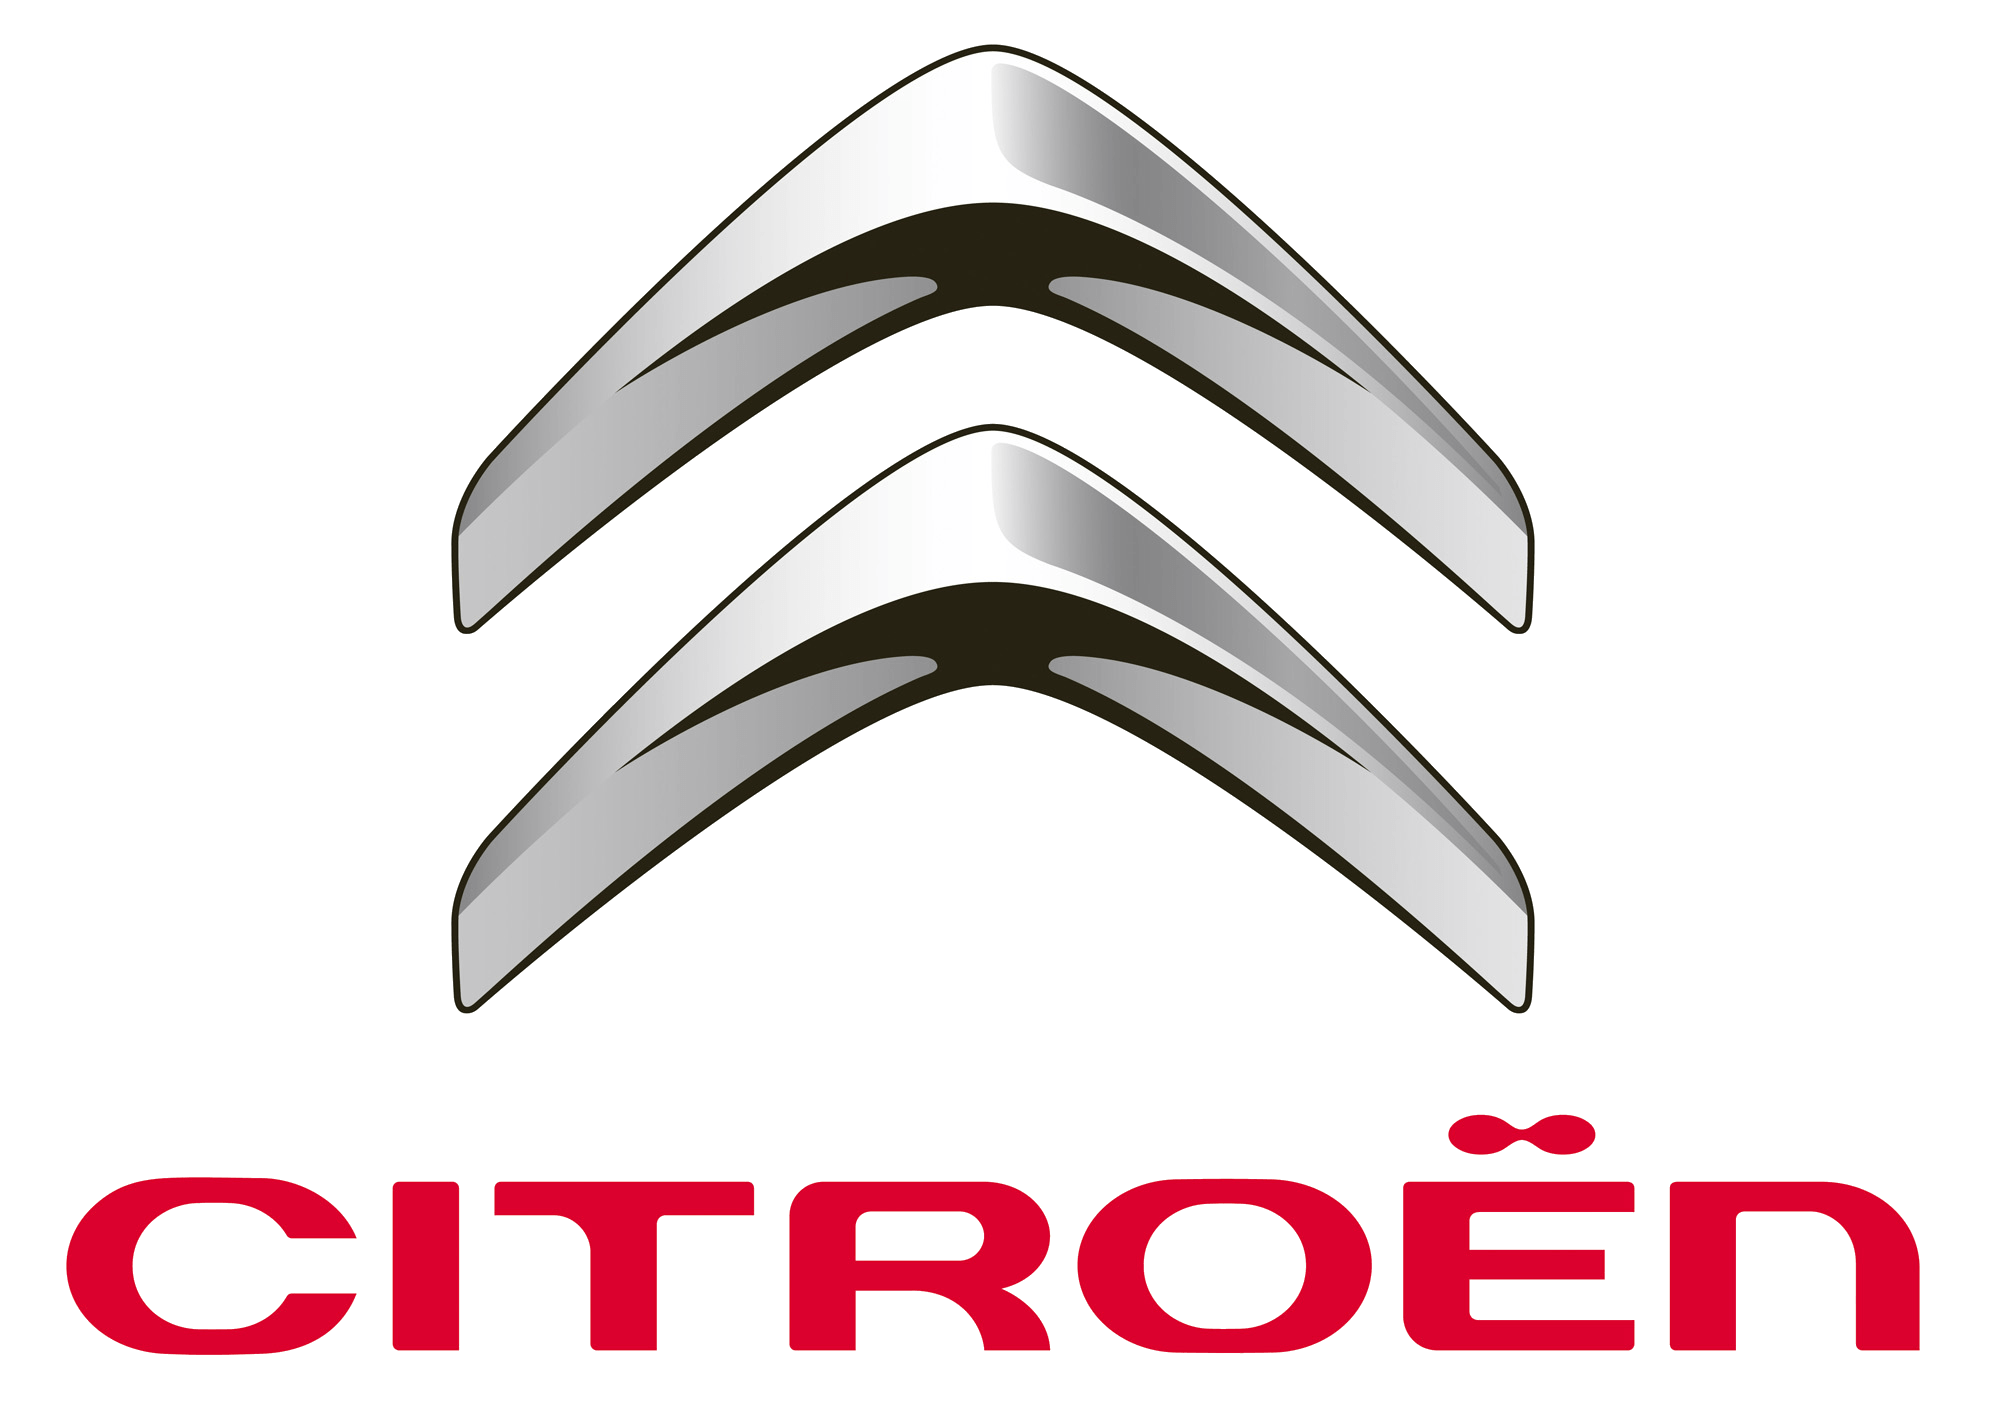 Boomerang Car Logo - Citroen Logo, Citroen Car Symbol Meaning and History | Car Brand ...